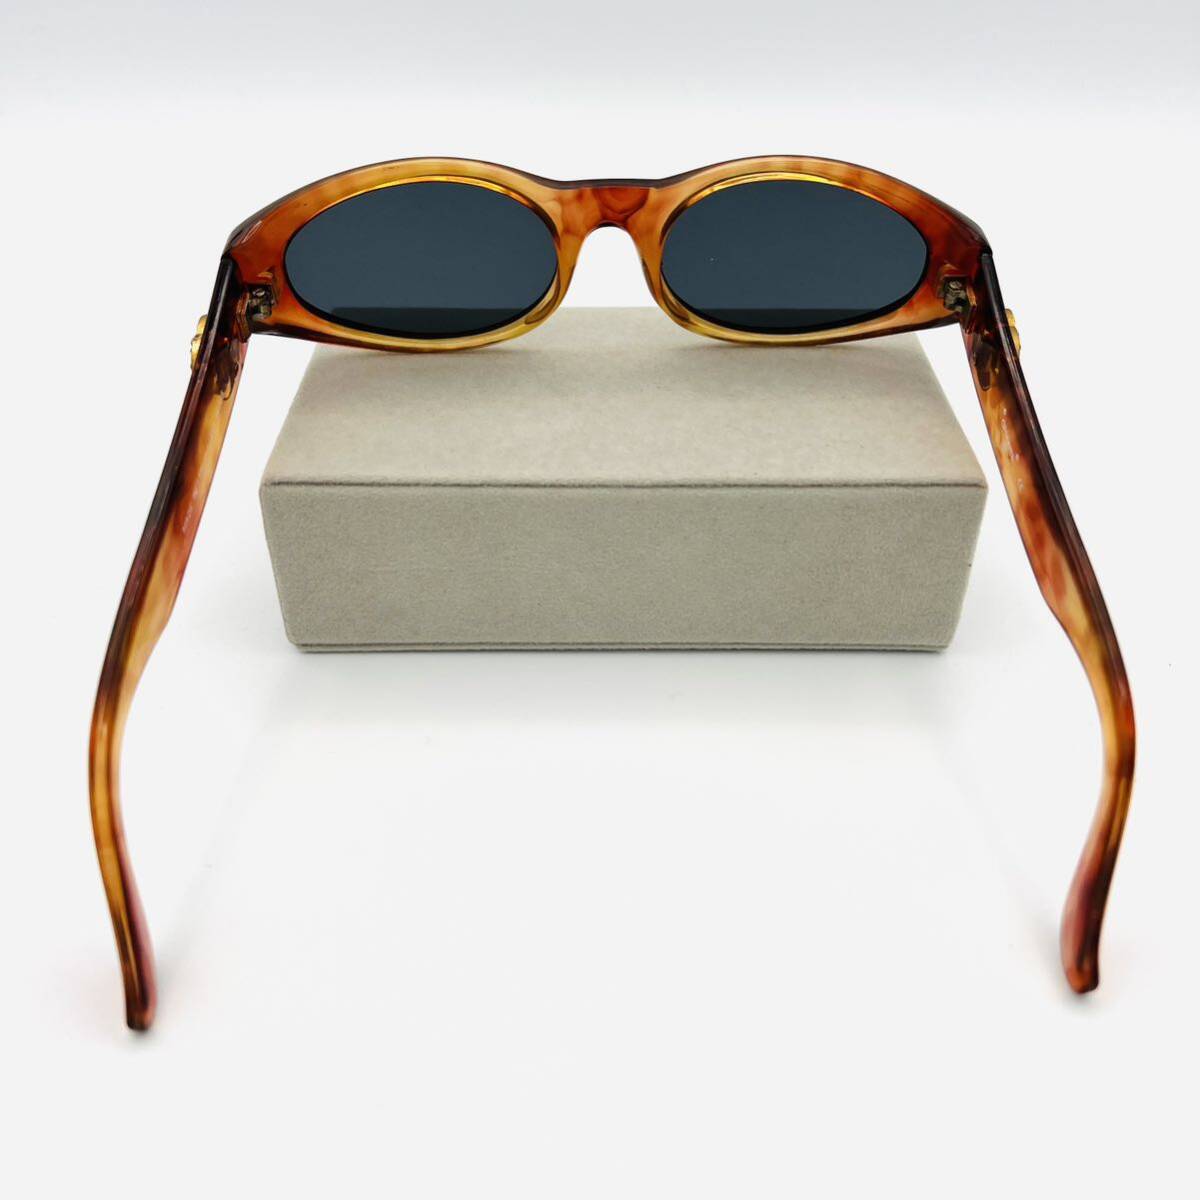 CHANEL Chanel here Mark sunglasses glasses glasses rhinestone case attaching 